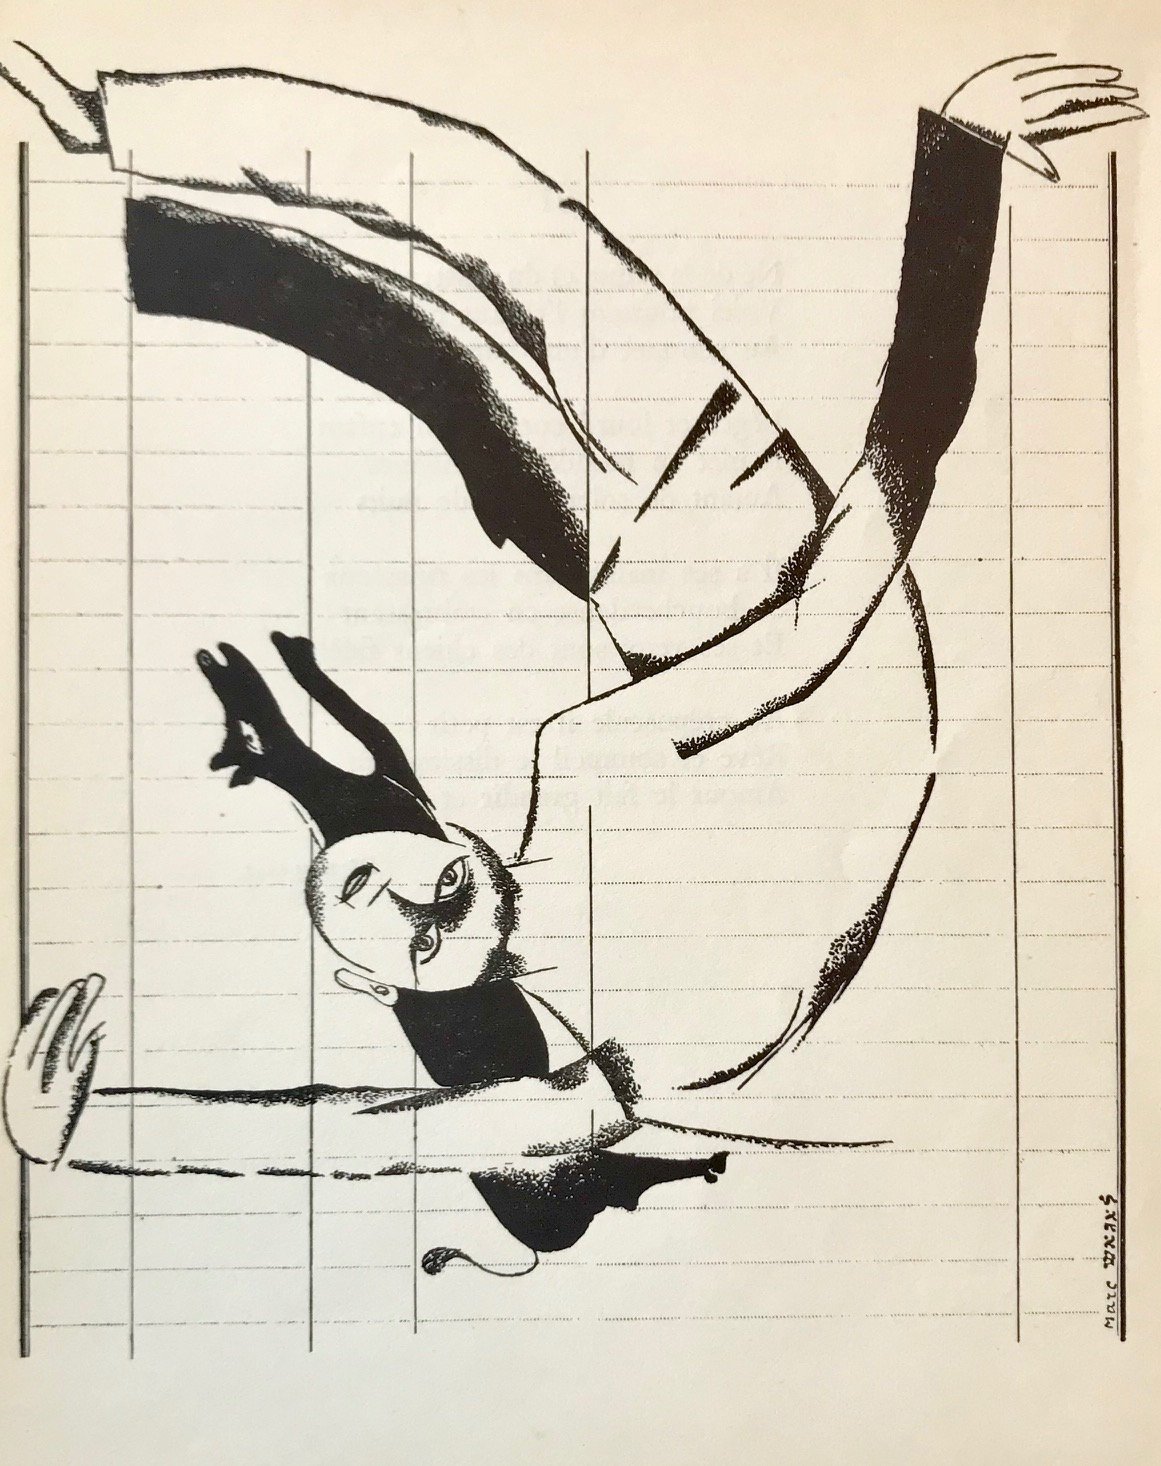 Chagall Lithograph 8, Le dur desir de durer, 1950